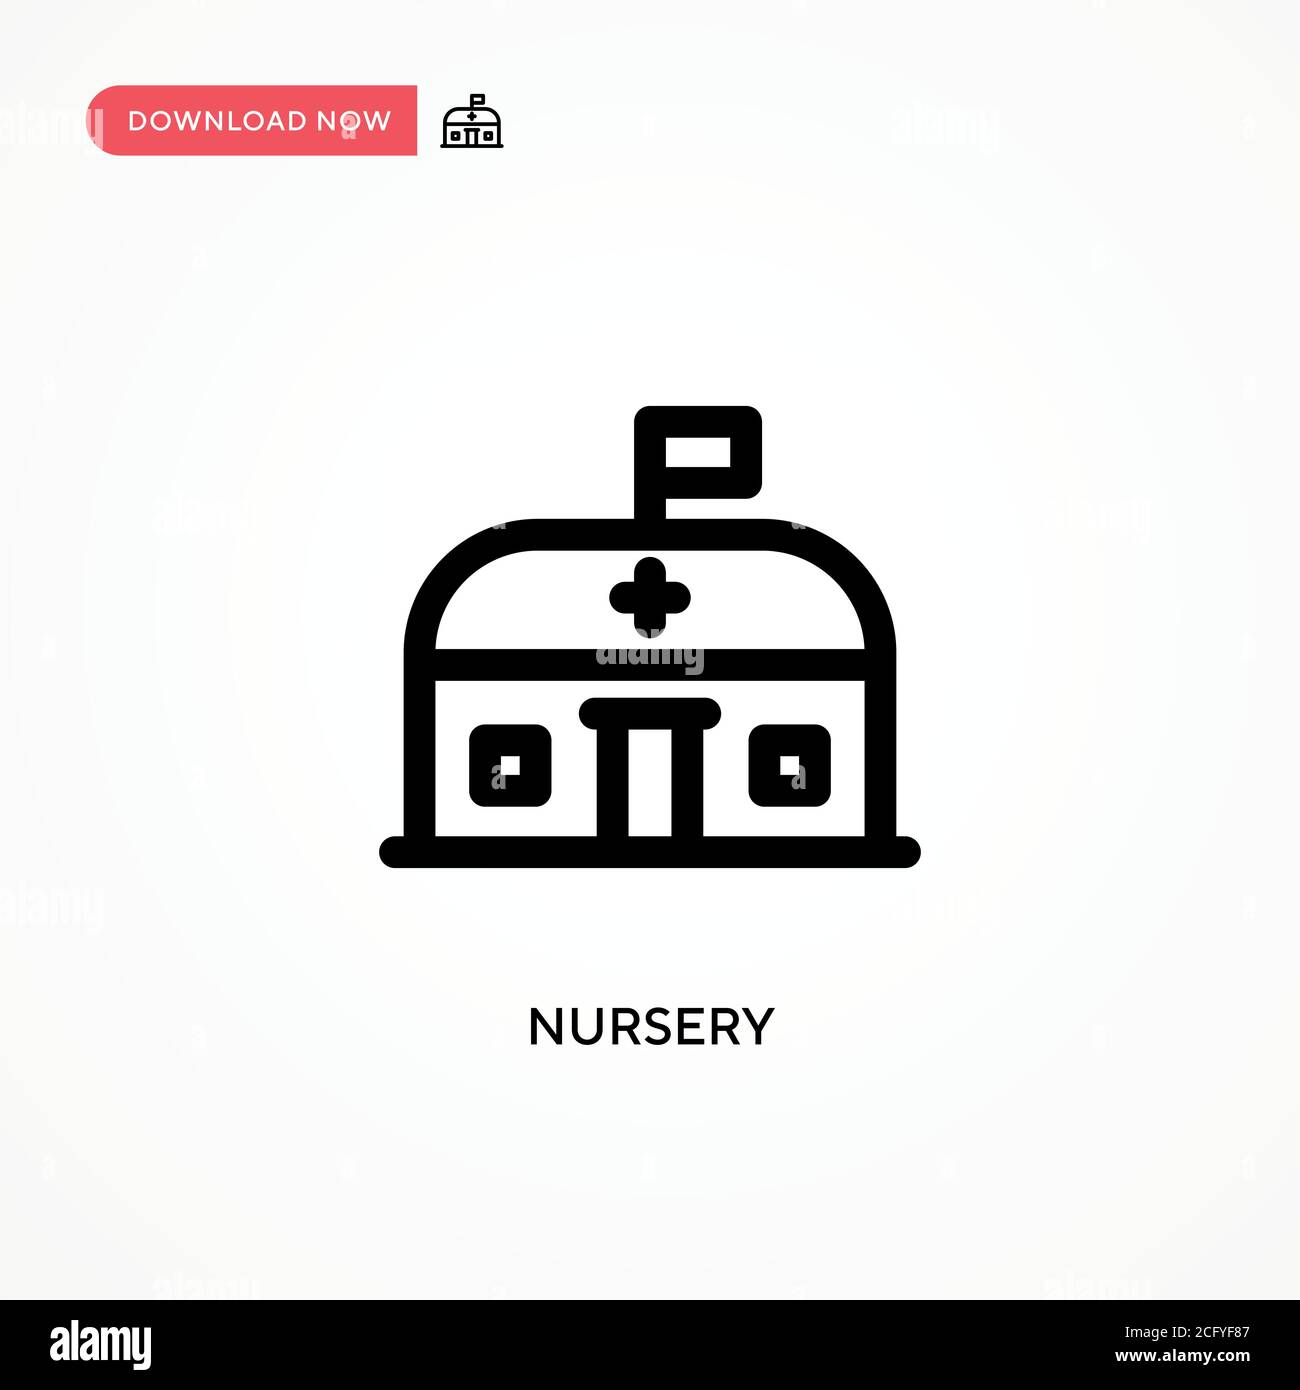 Nursery Simple vector icon. Modern, simple flat vector